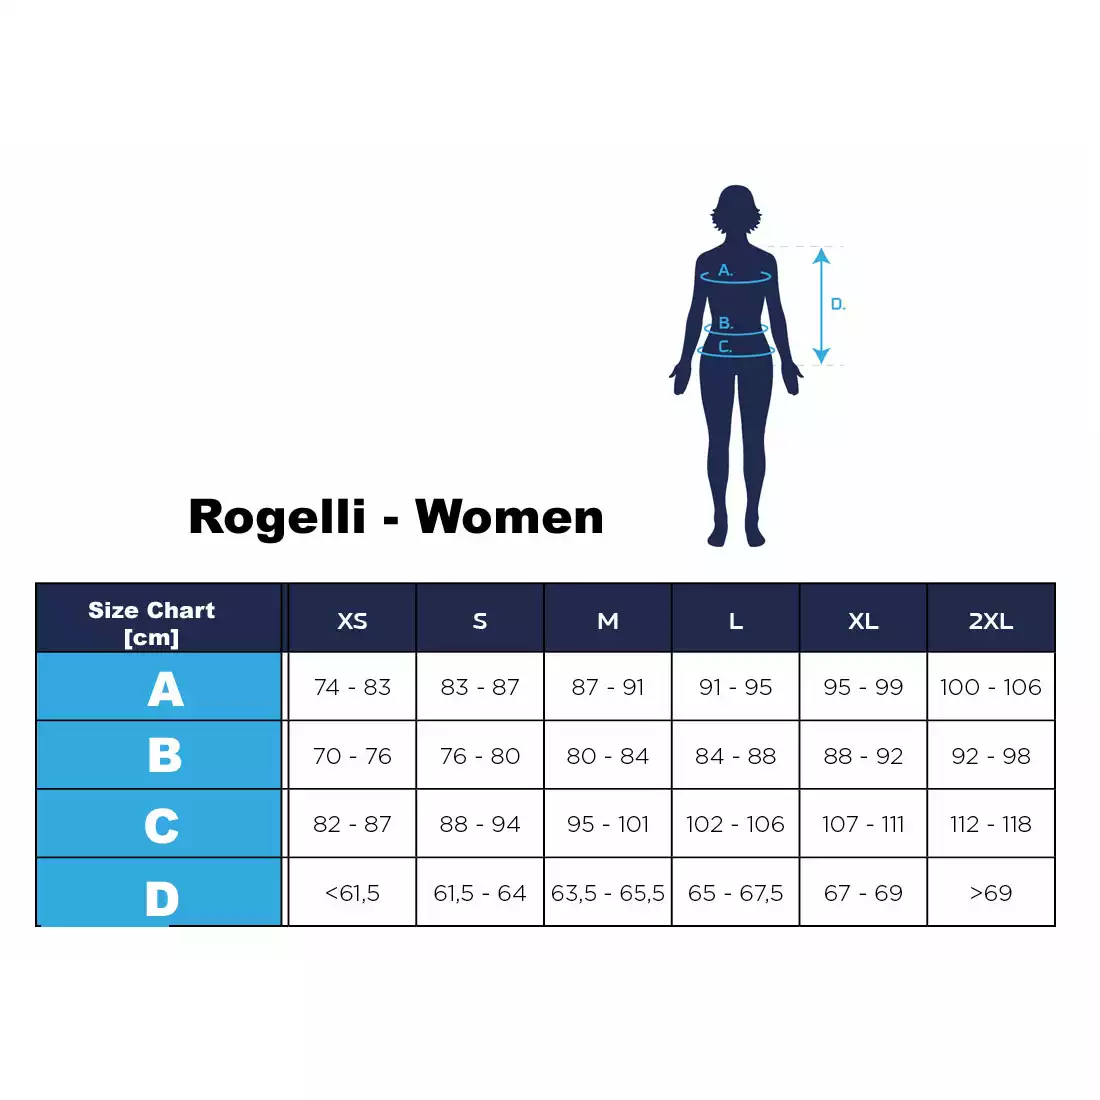 ROGELLI CARLYN 3.0 damska koszulka rowerowa czarno-szaro-różowa 010.108